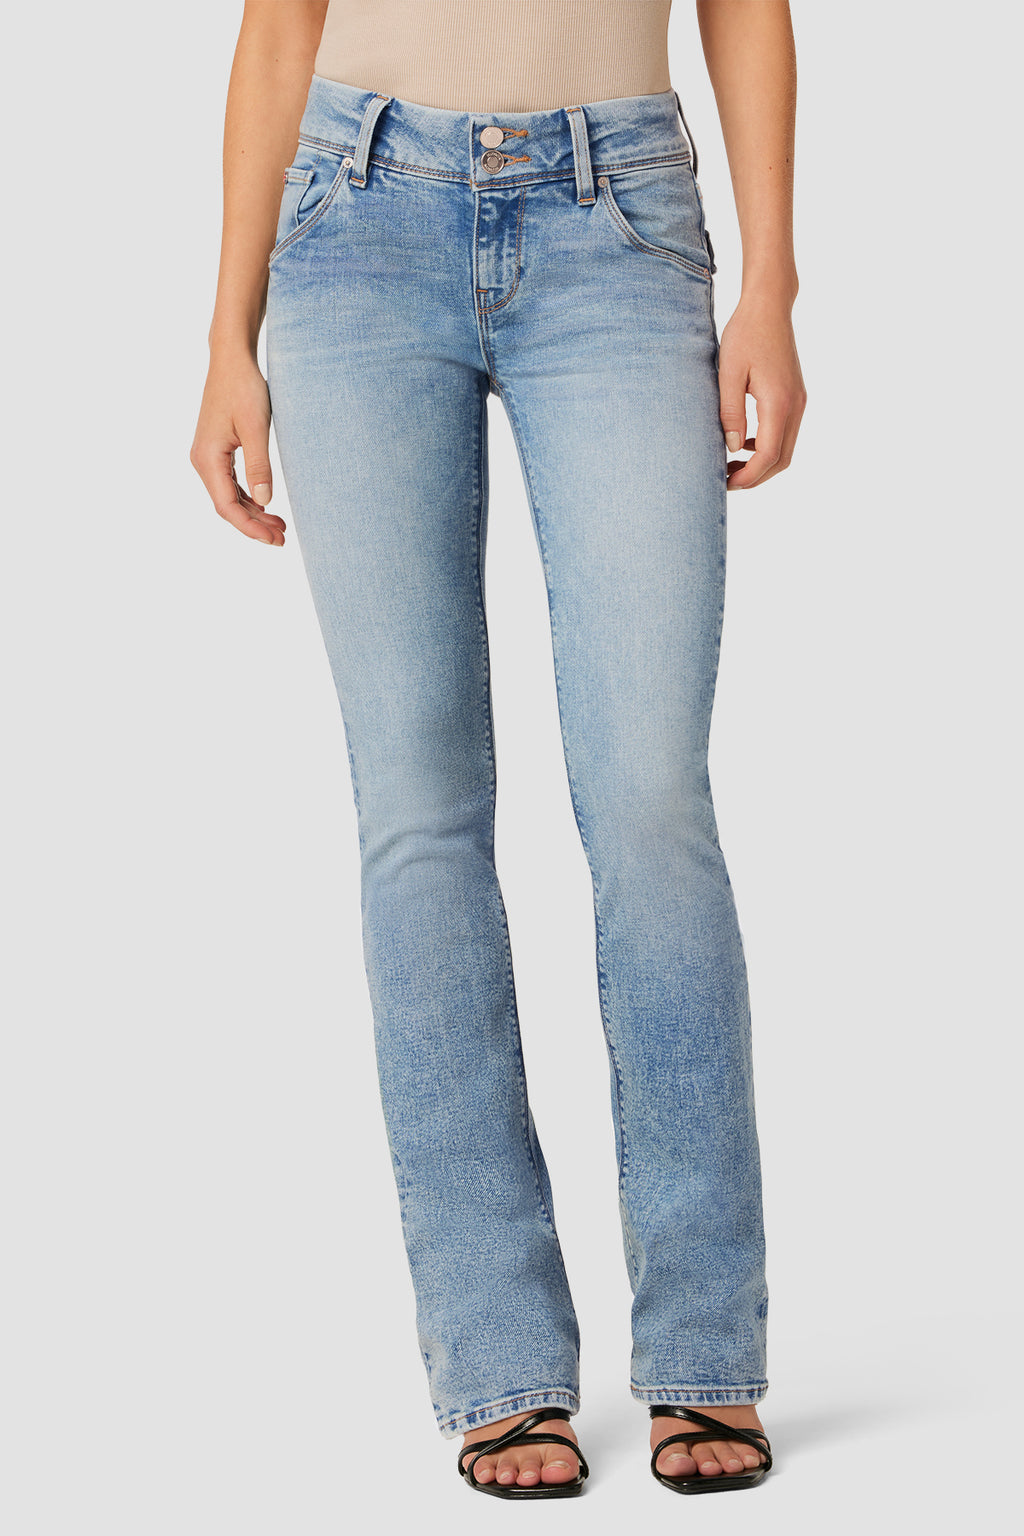 Shop Women's View All at Hudson Jeans | Hudson Jeans